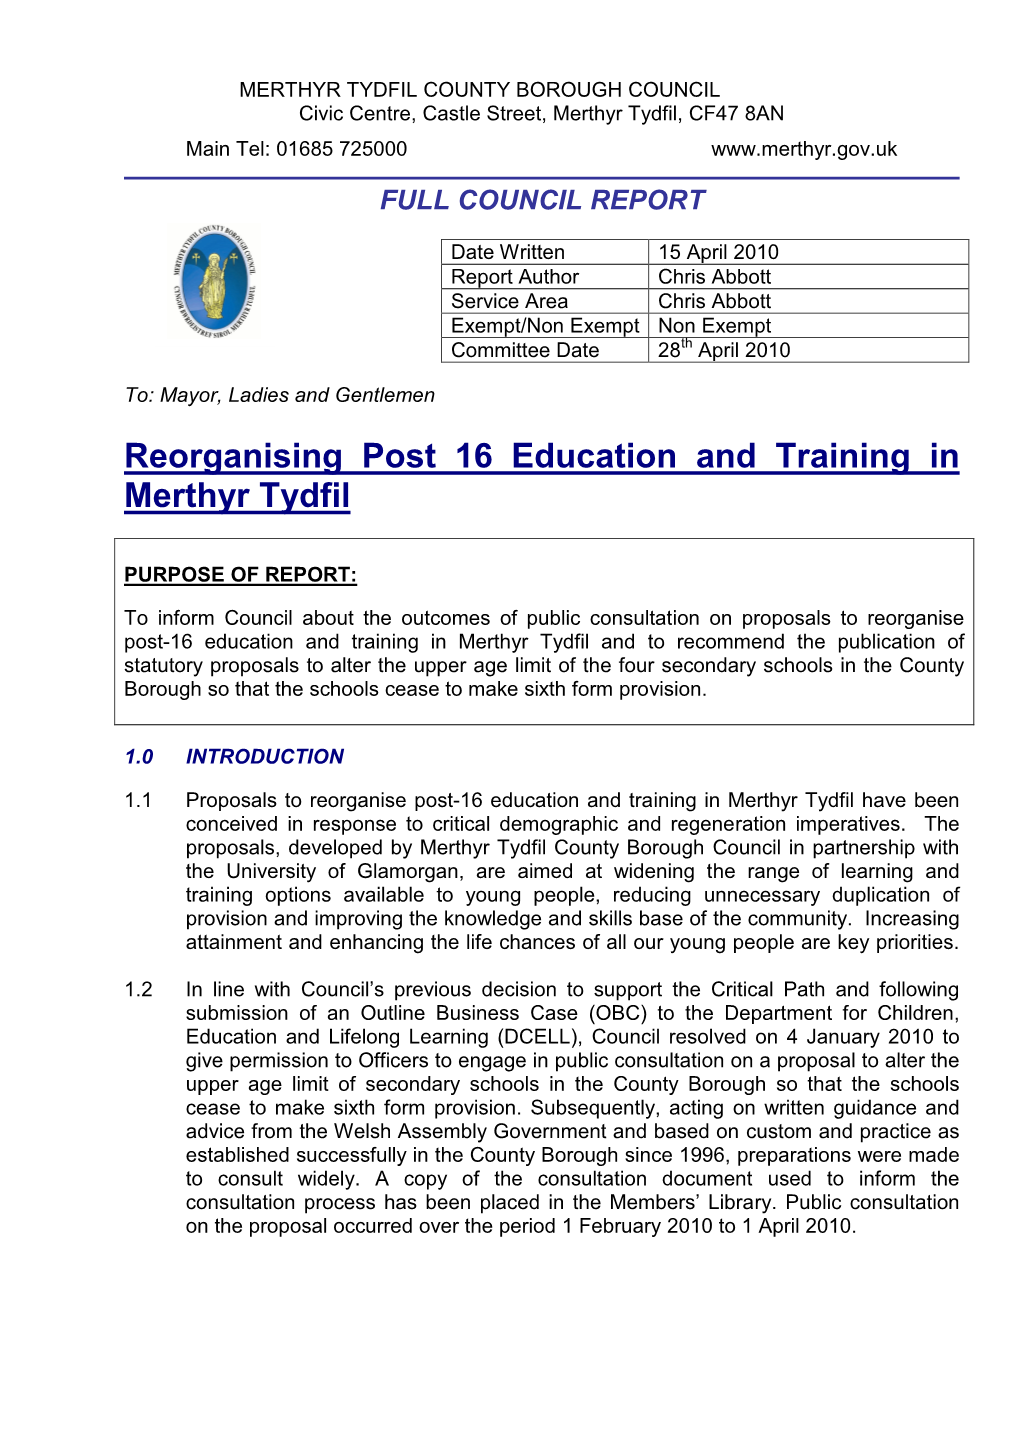 Reorganising Post 16 Education and Training in Merthyr Tydfil